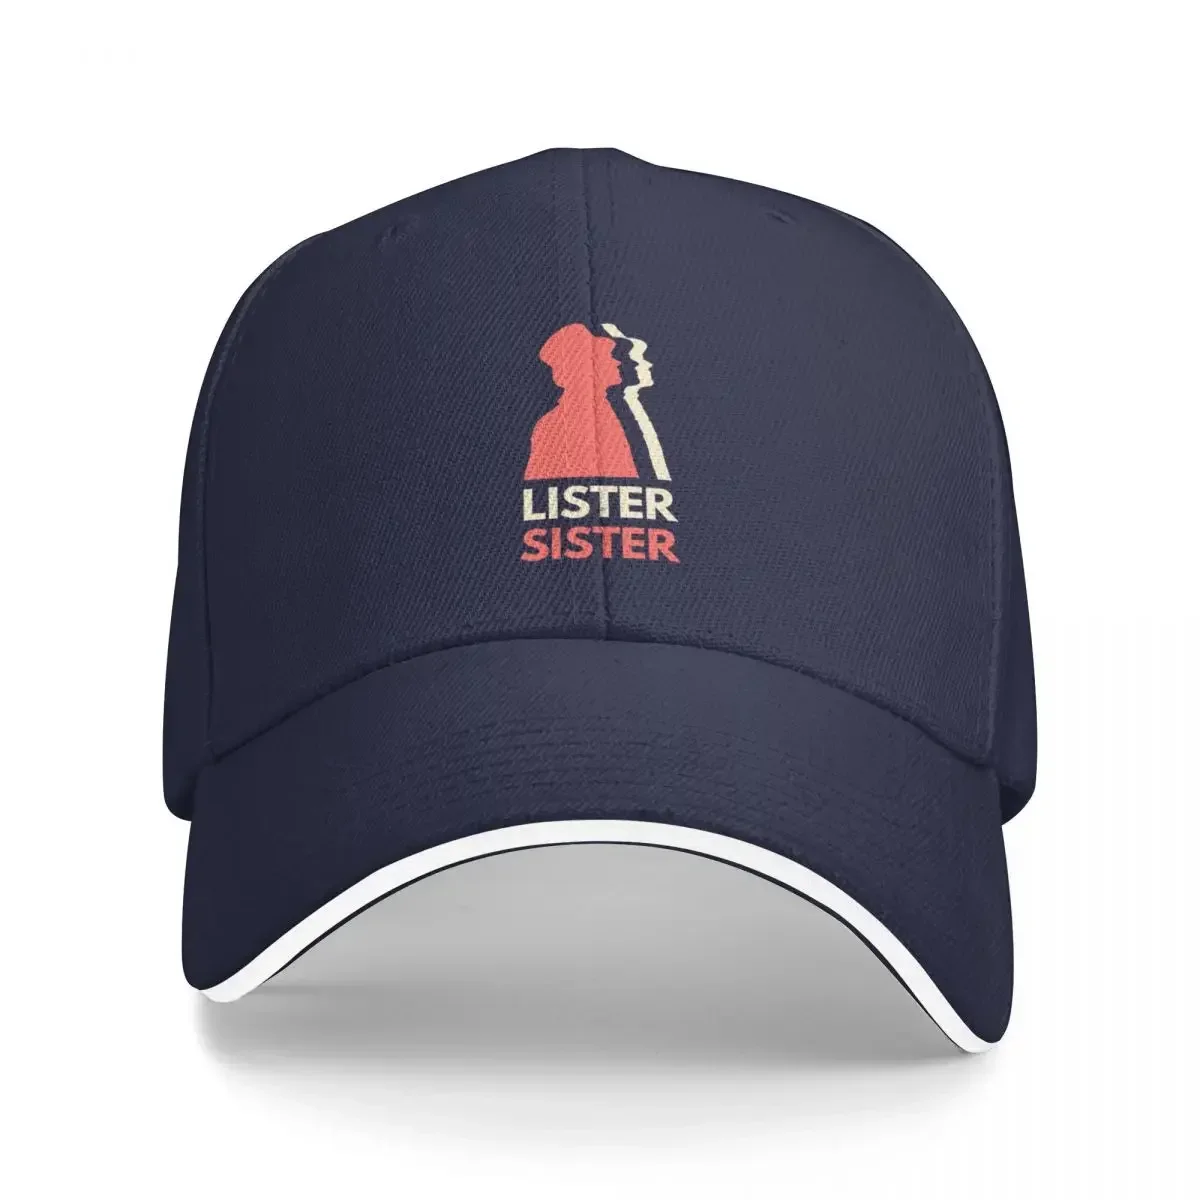 

Lister Sister - Anne Lister Silhouettes Cap Baseball Cap Snap back hat Caps cap woman Men's